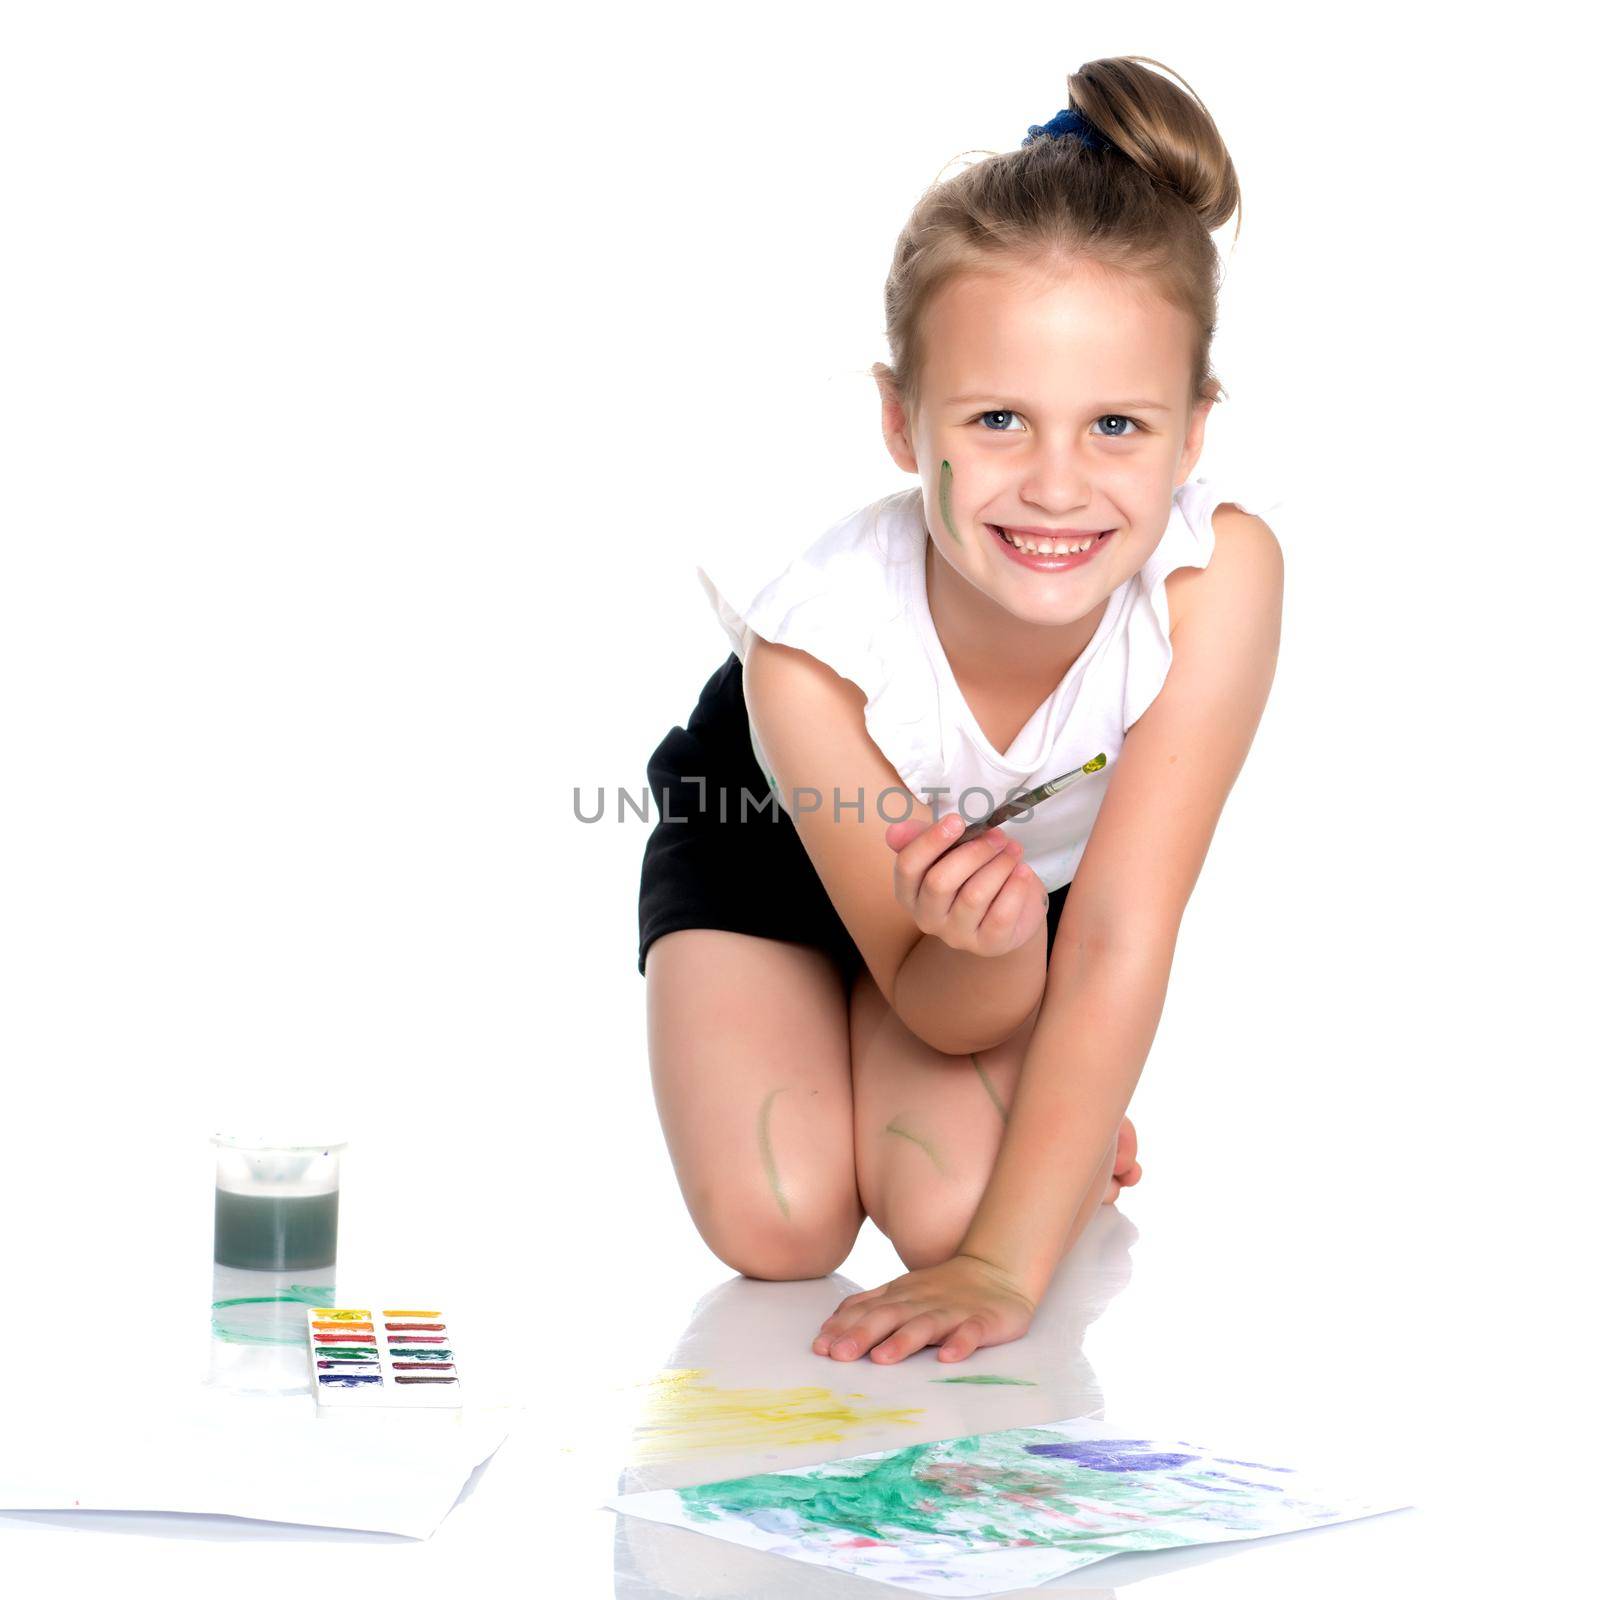 A little girl draws paints on her body by kolesnikov_studio